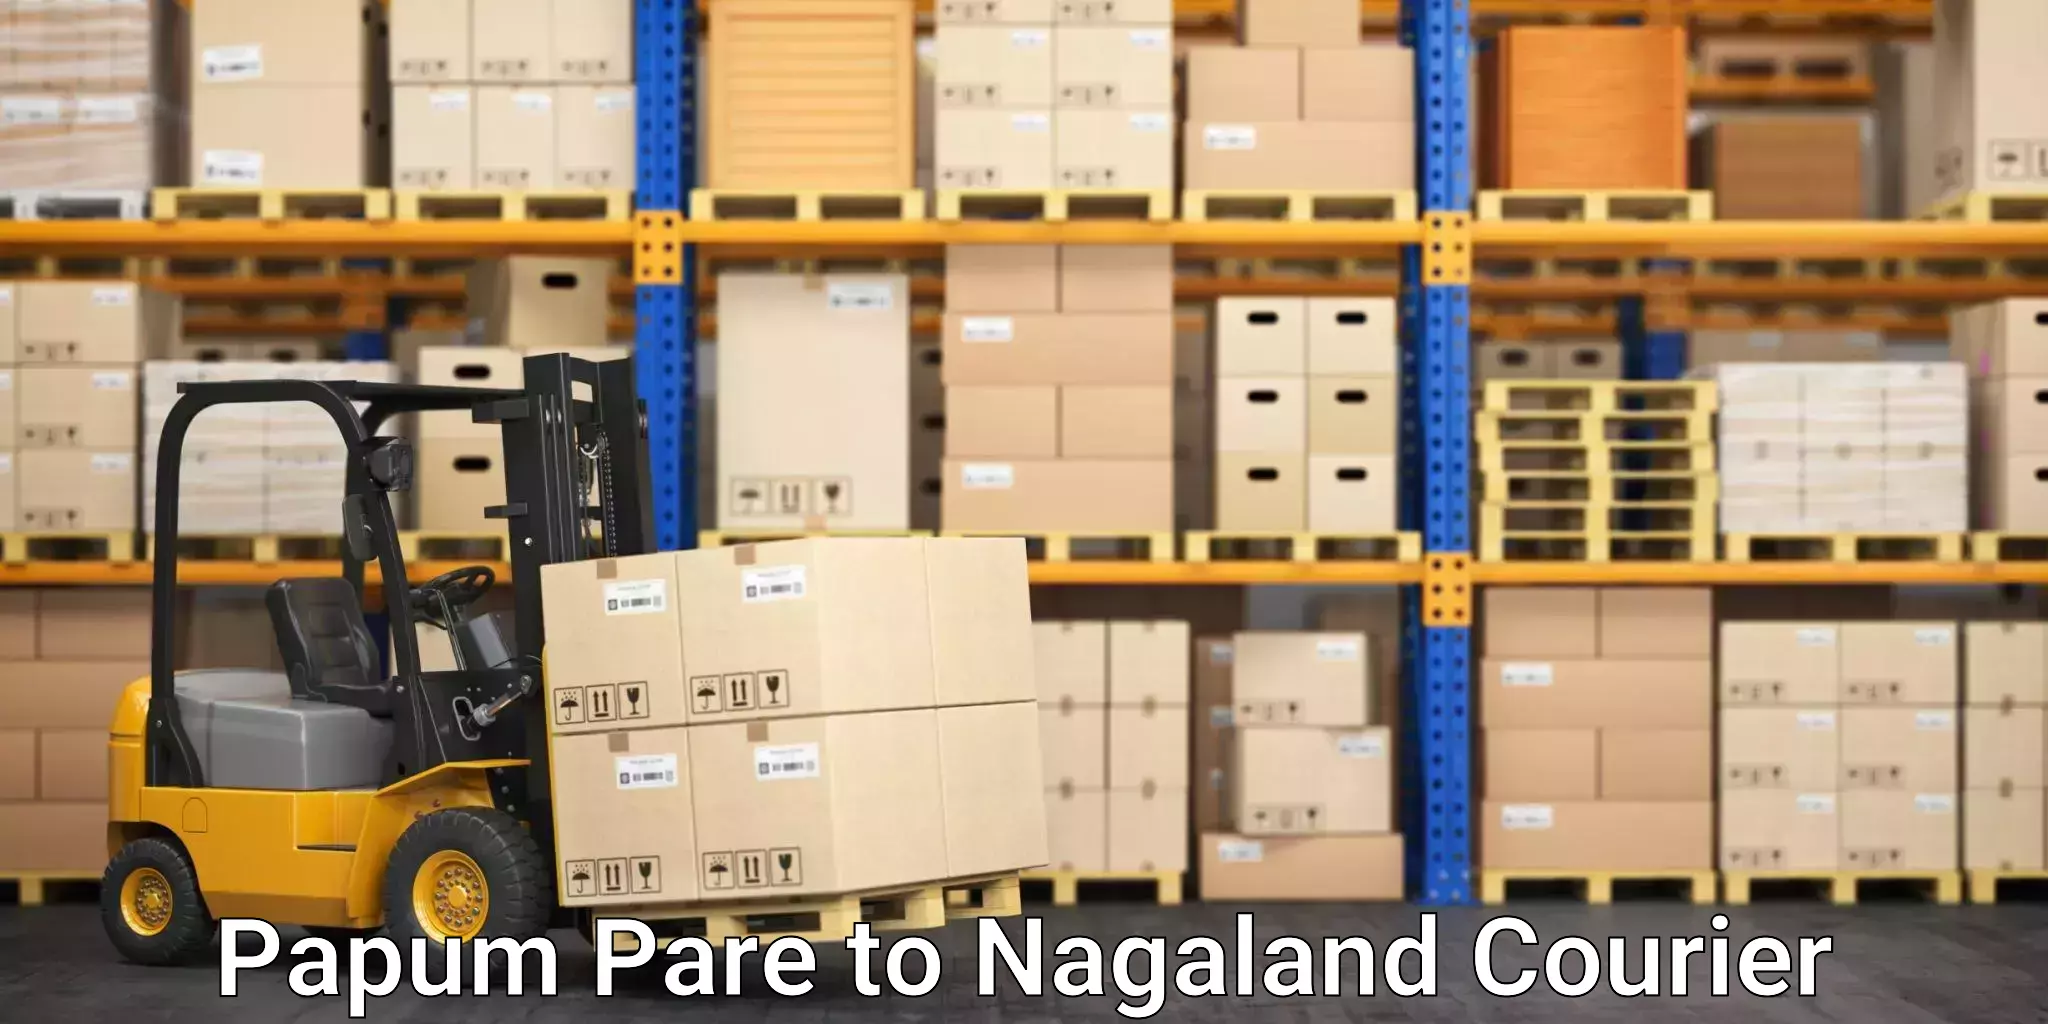 Reliable courier service Papum Pare to Nagaland